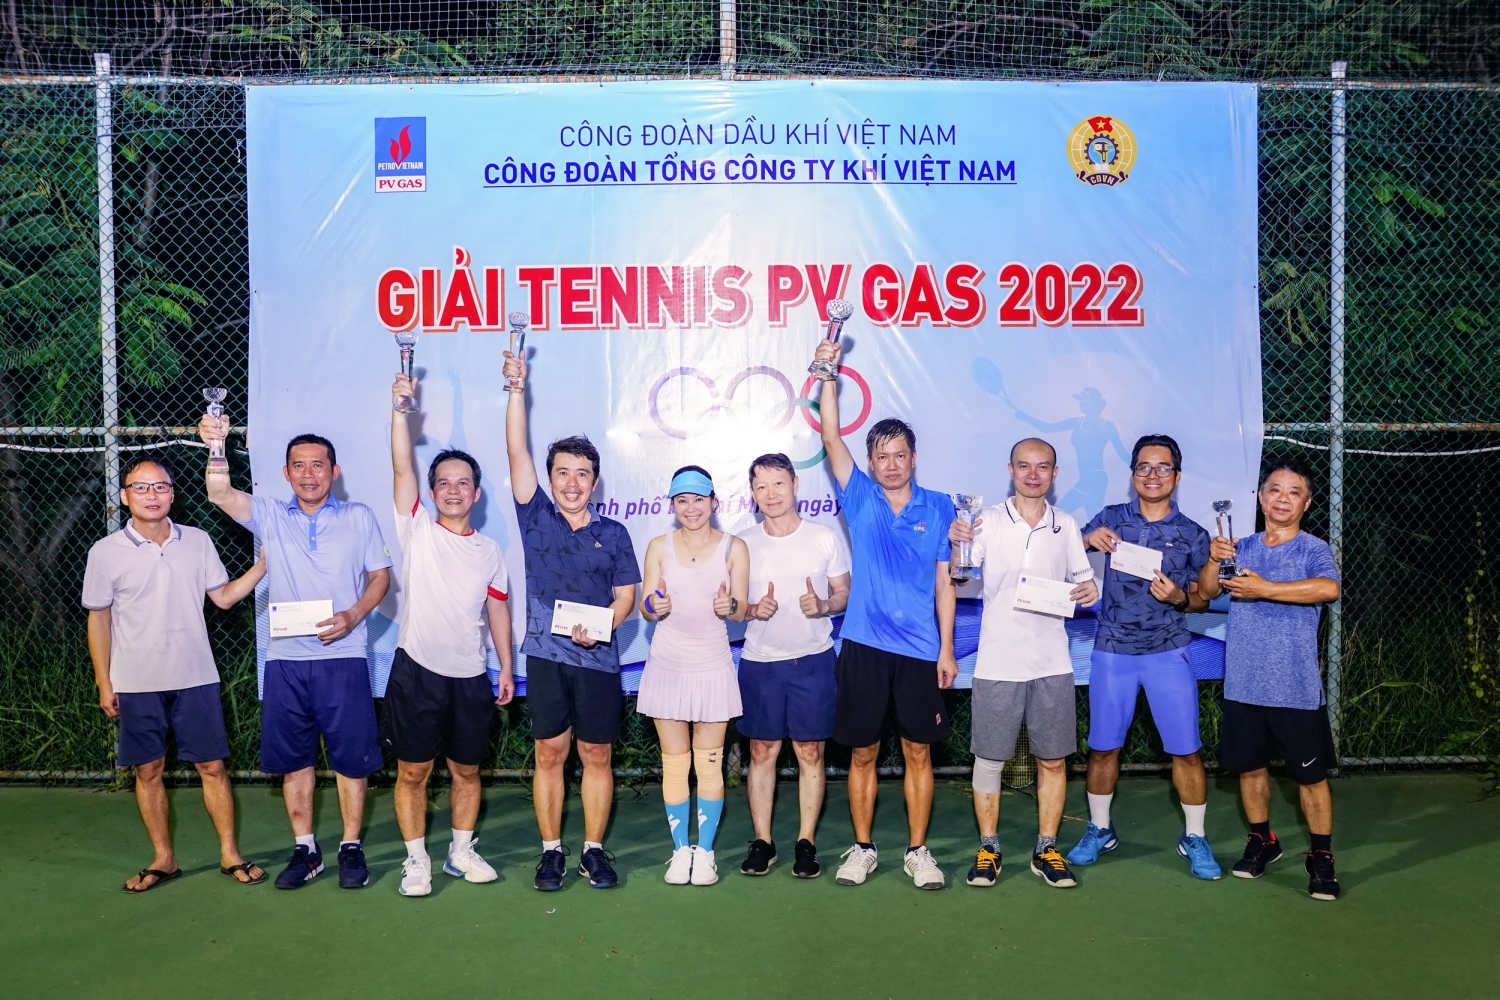 Trao giải Tennis PV GAS 2022 tại TP HCM